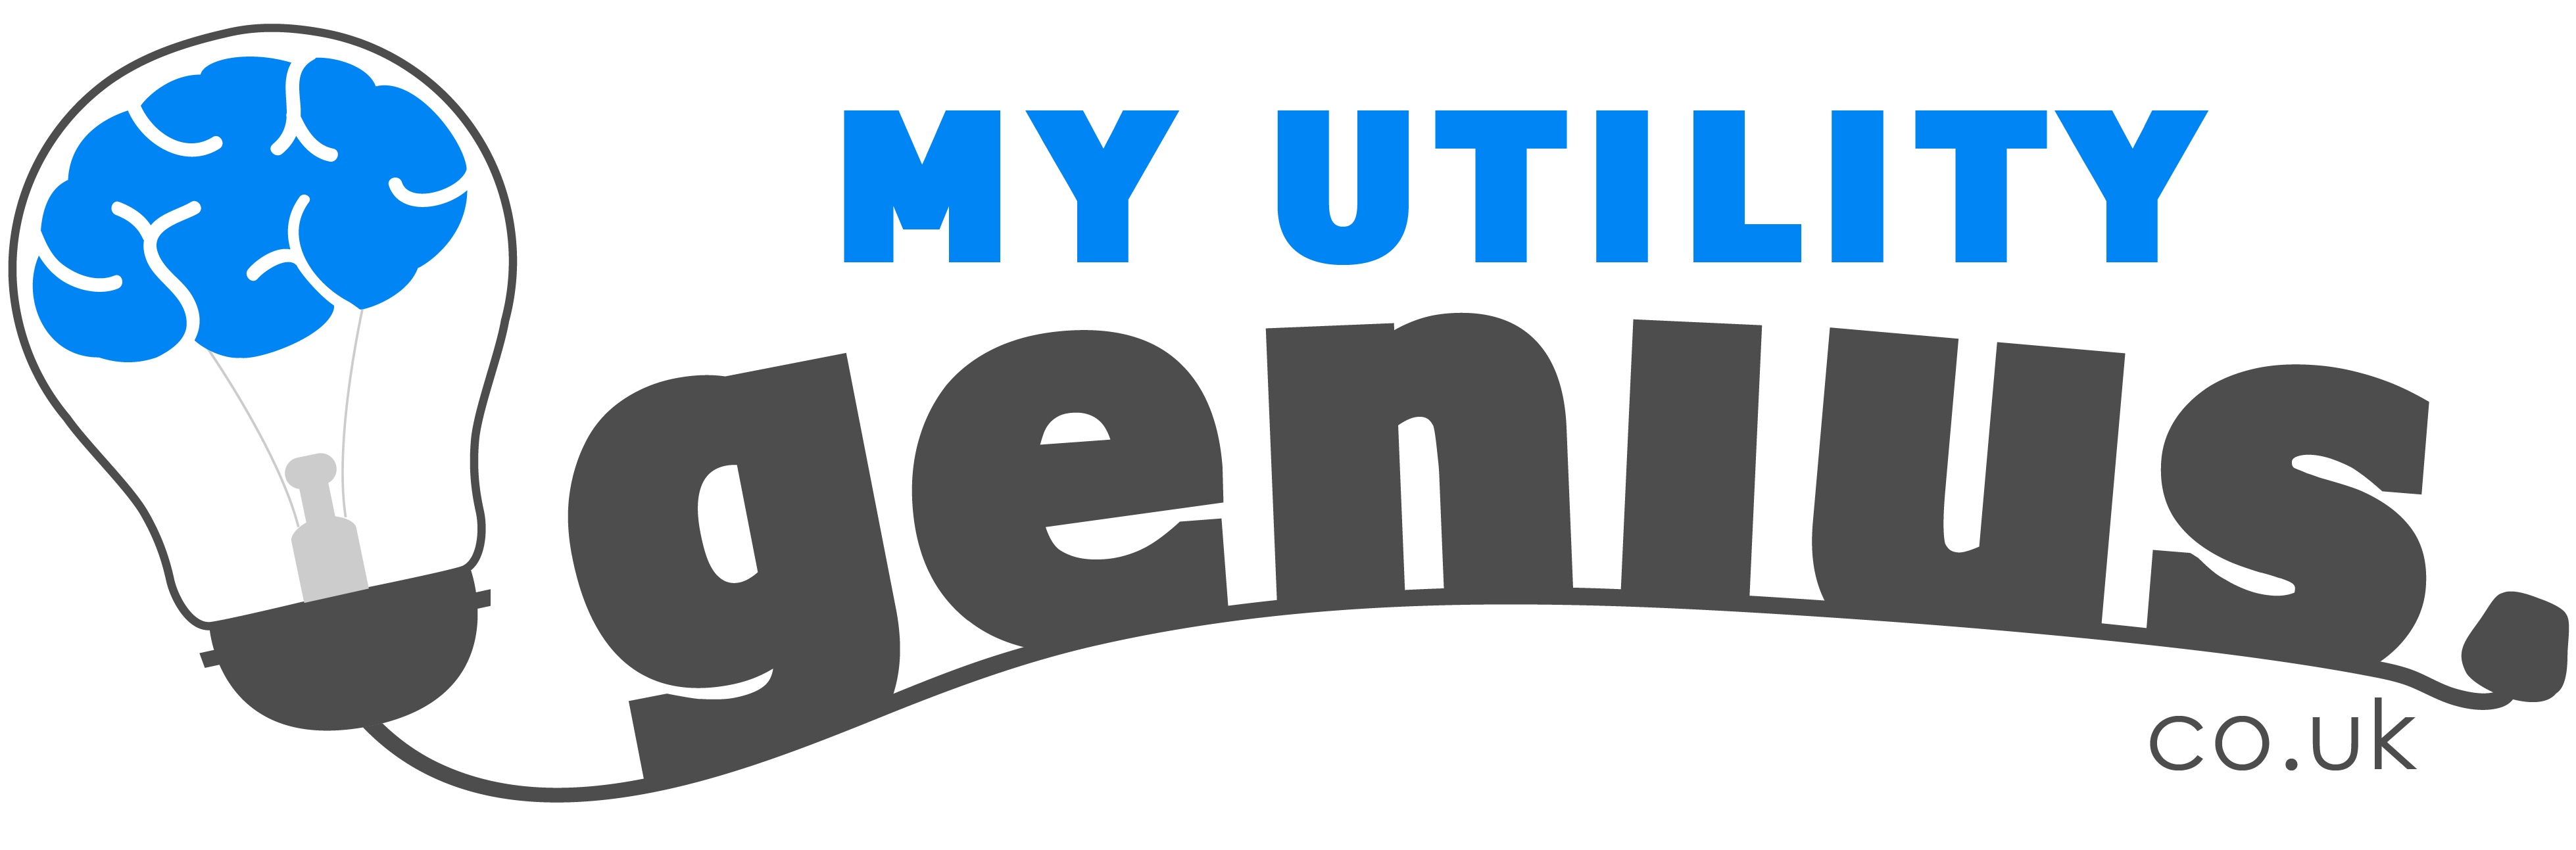 myutilitygenius-logo-standard